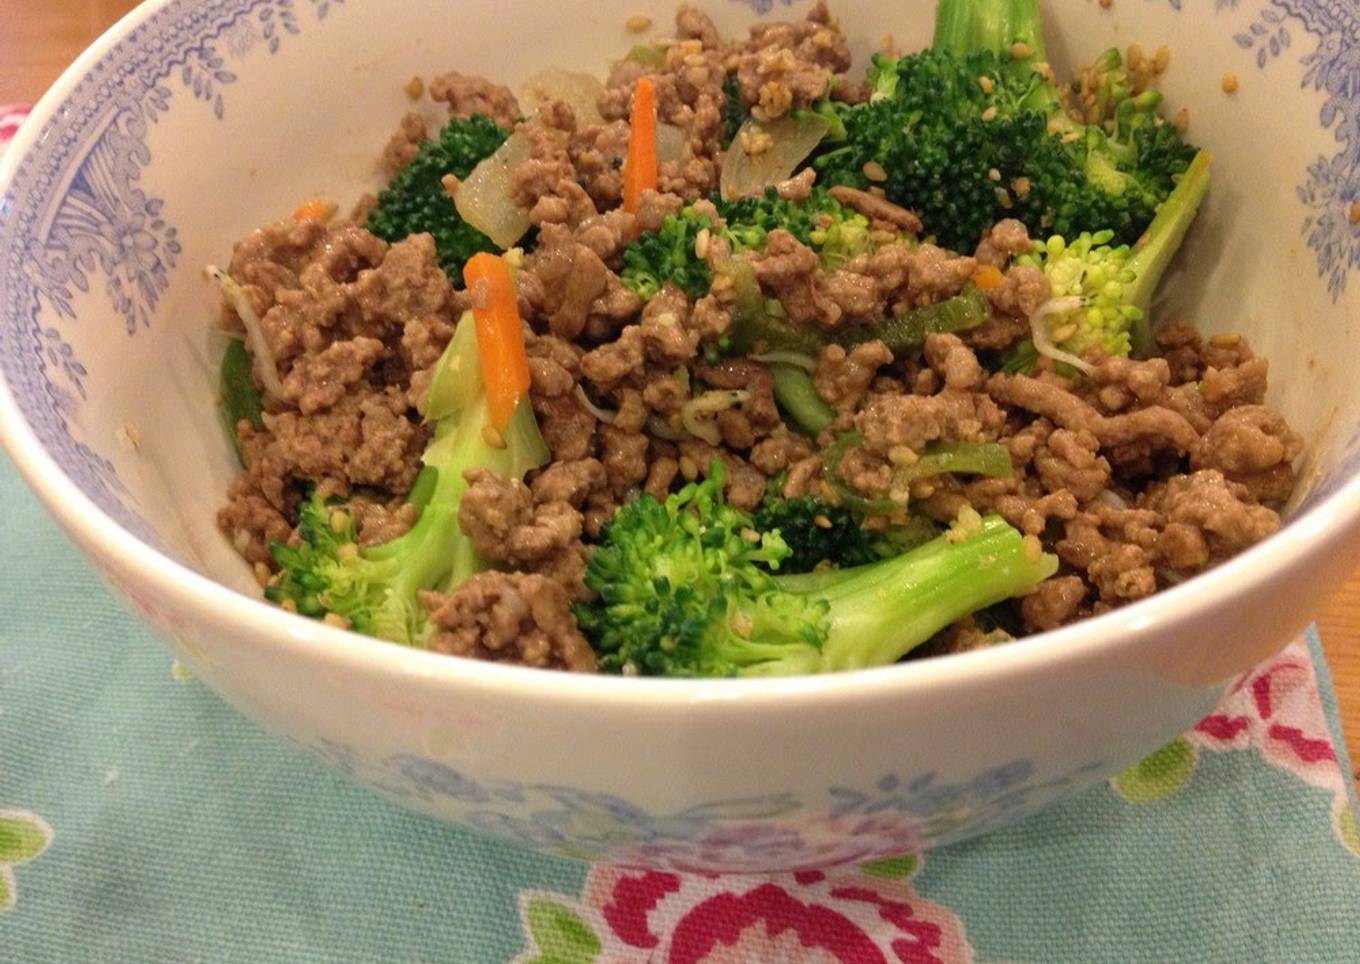 Broccoli & Ground Beef Stir-fry